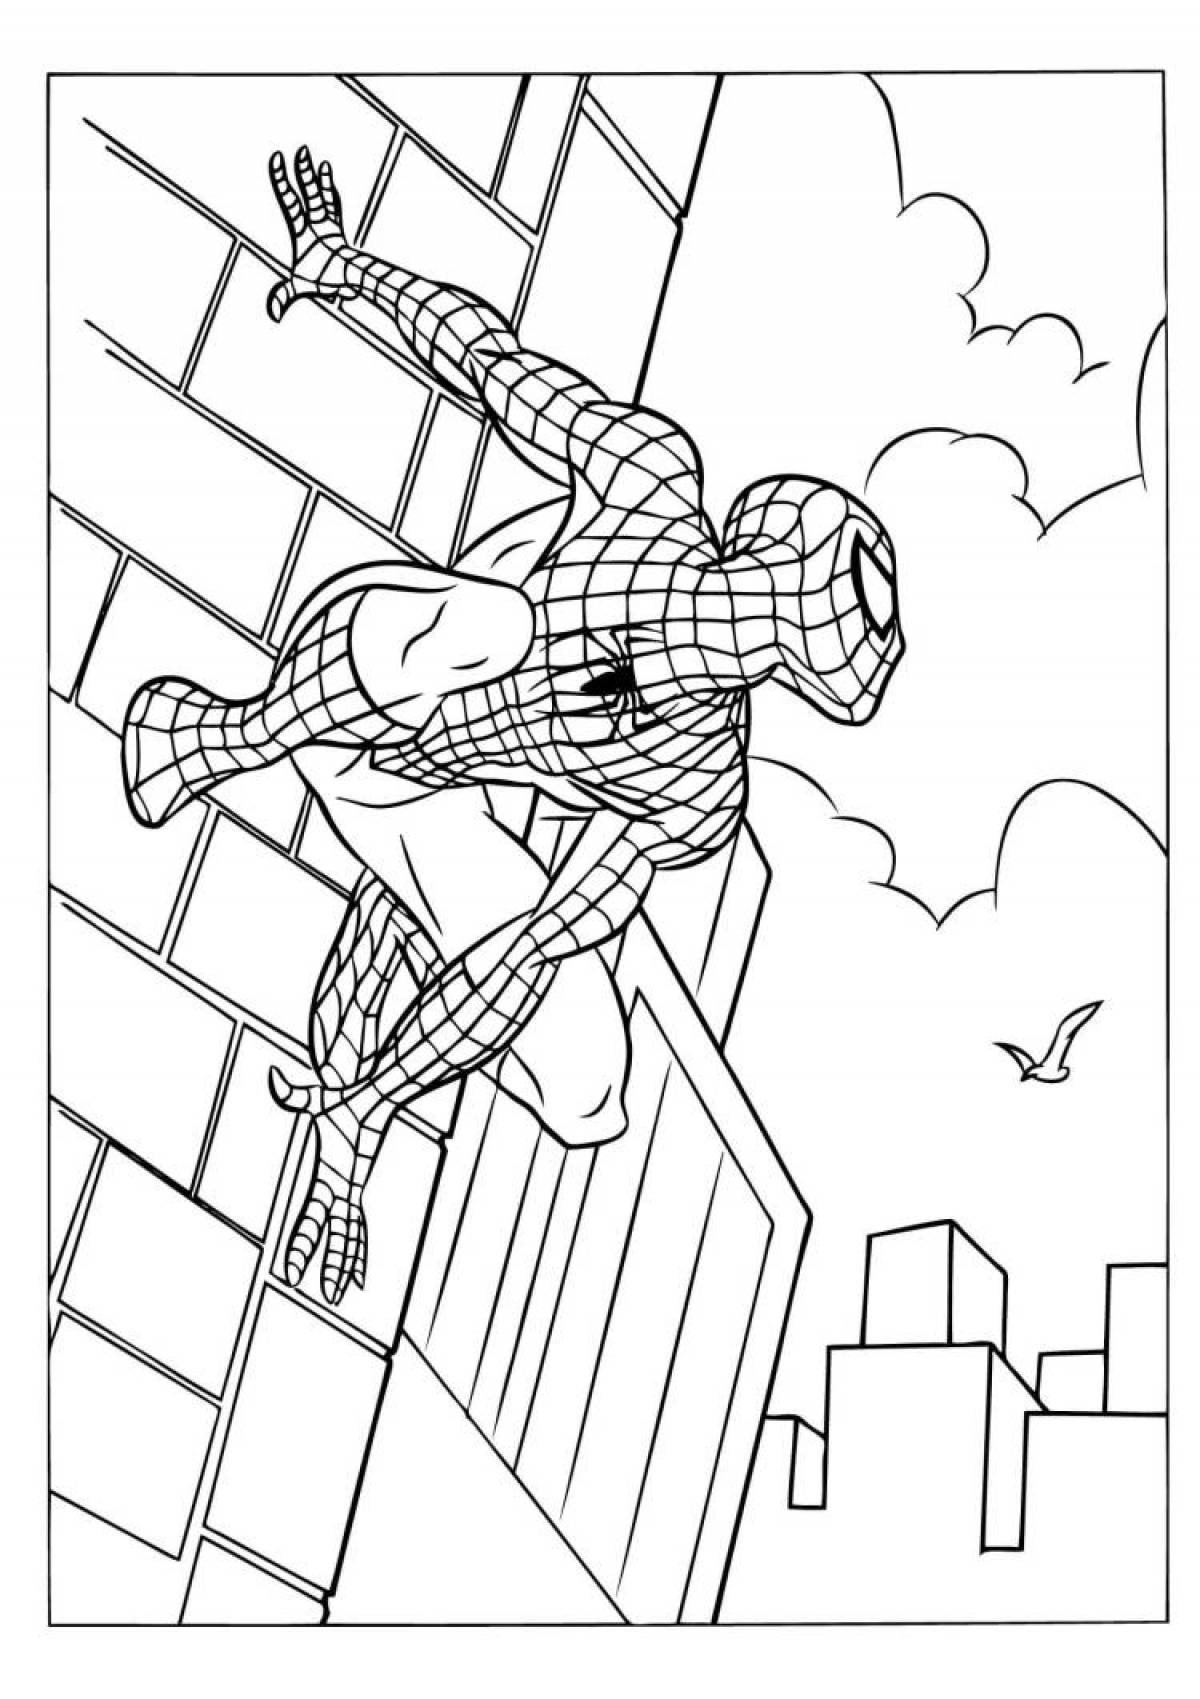 Spiderman's impressive coloring page